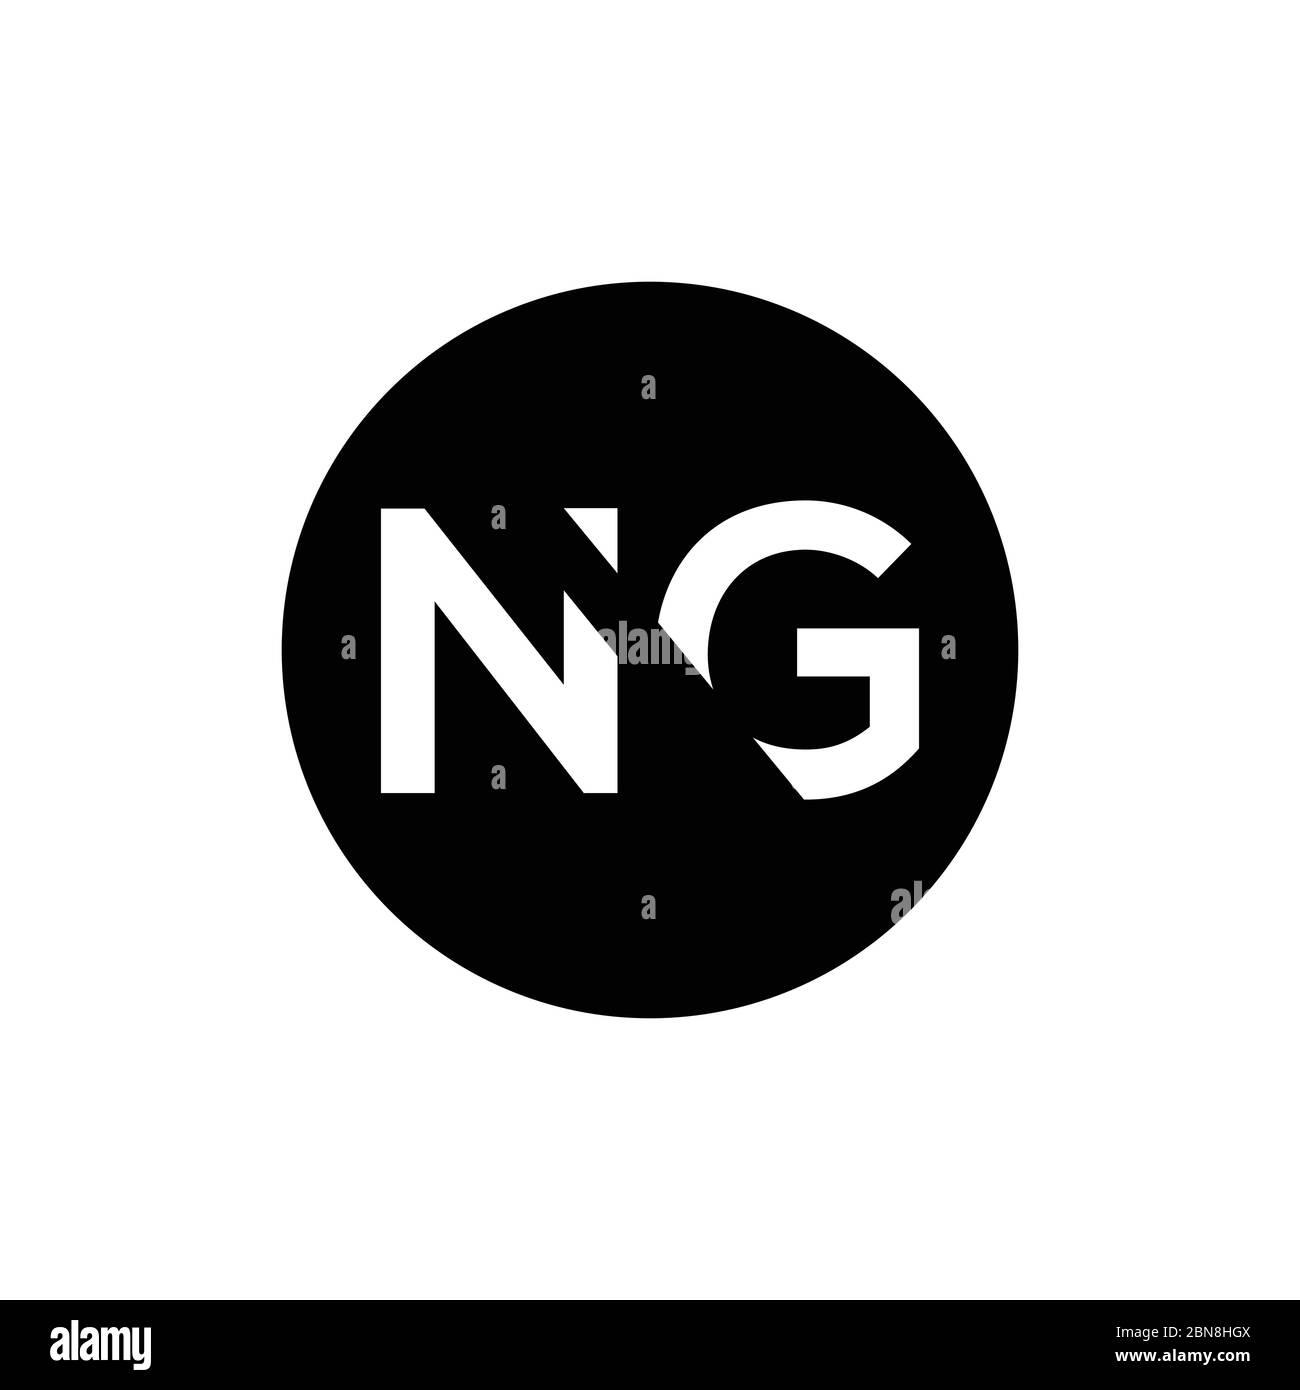 Ng logo Black and White Stock Photos & Images - Alamy